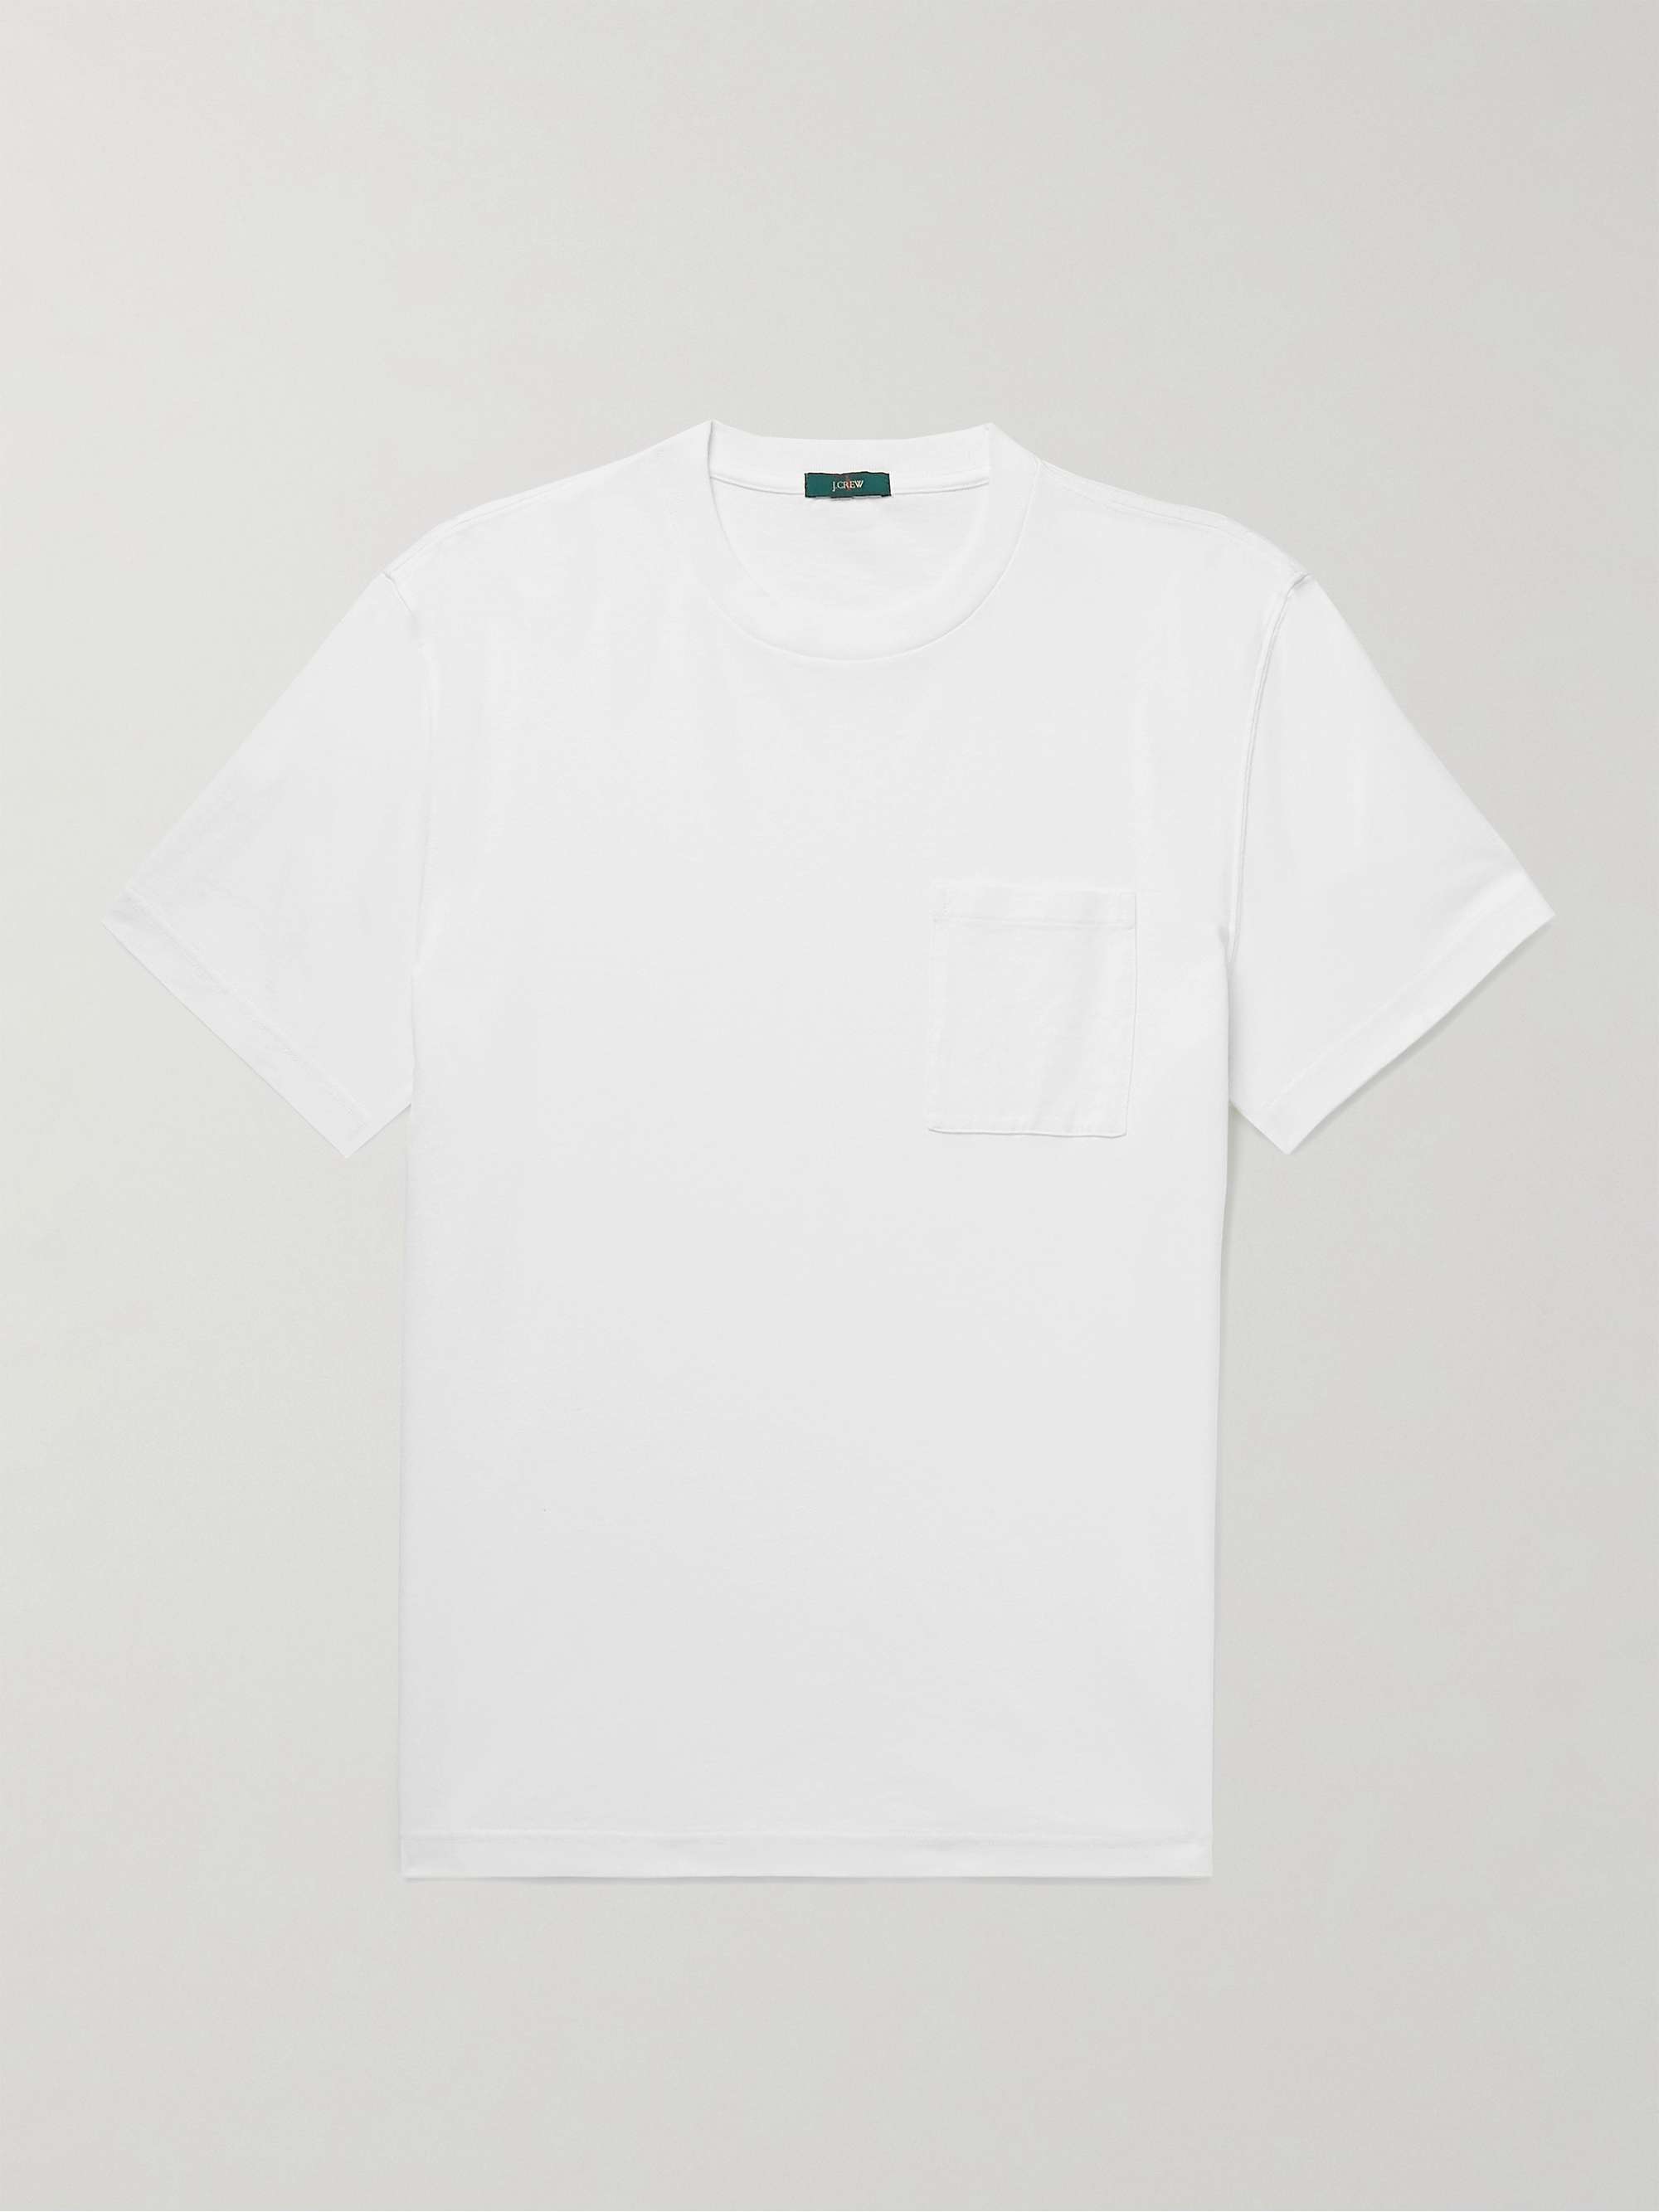 J.CREW Cotton-Jersey T-Shirt for Men